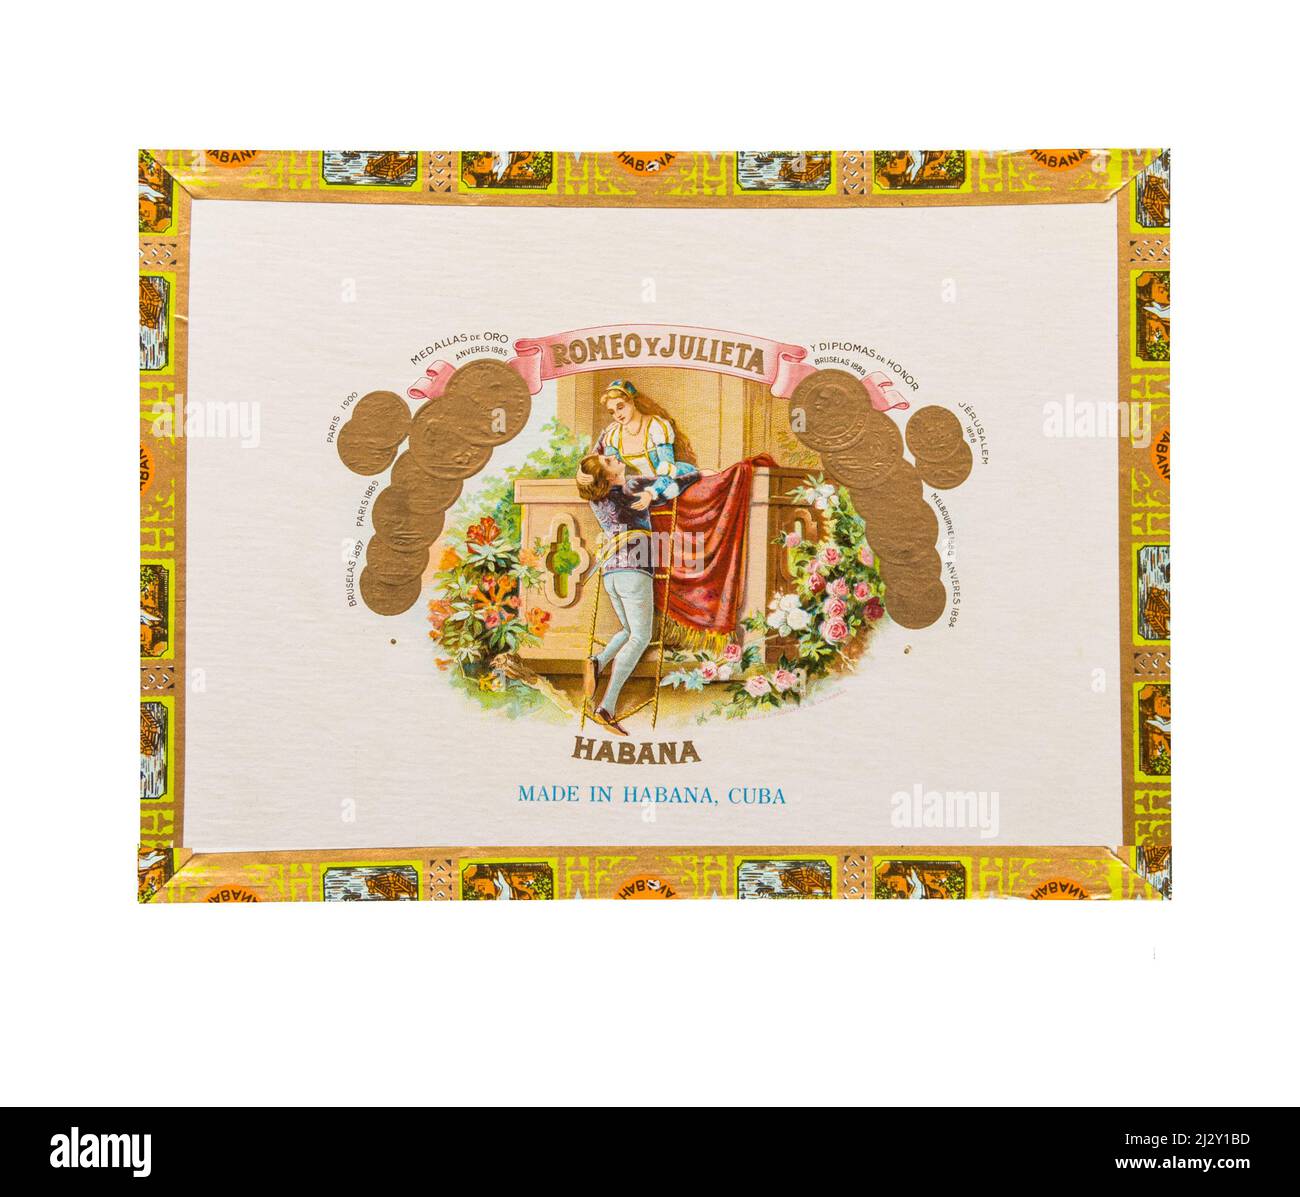 Un colorato Romeo Y Julieta Habana coperchio cubano scatola sigari - fabbricato in Habana Foto Stock